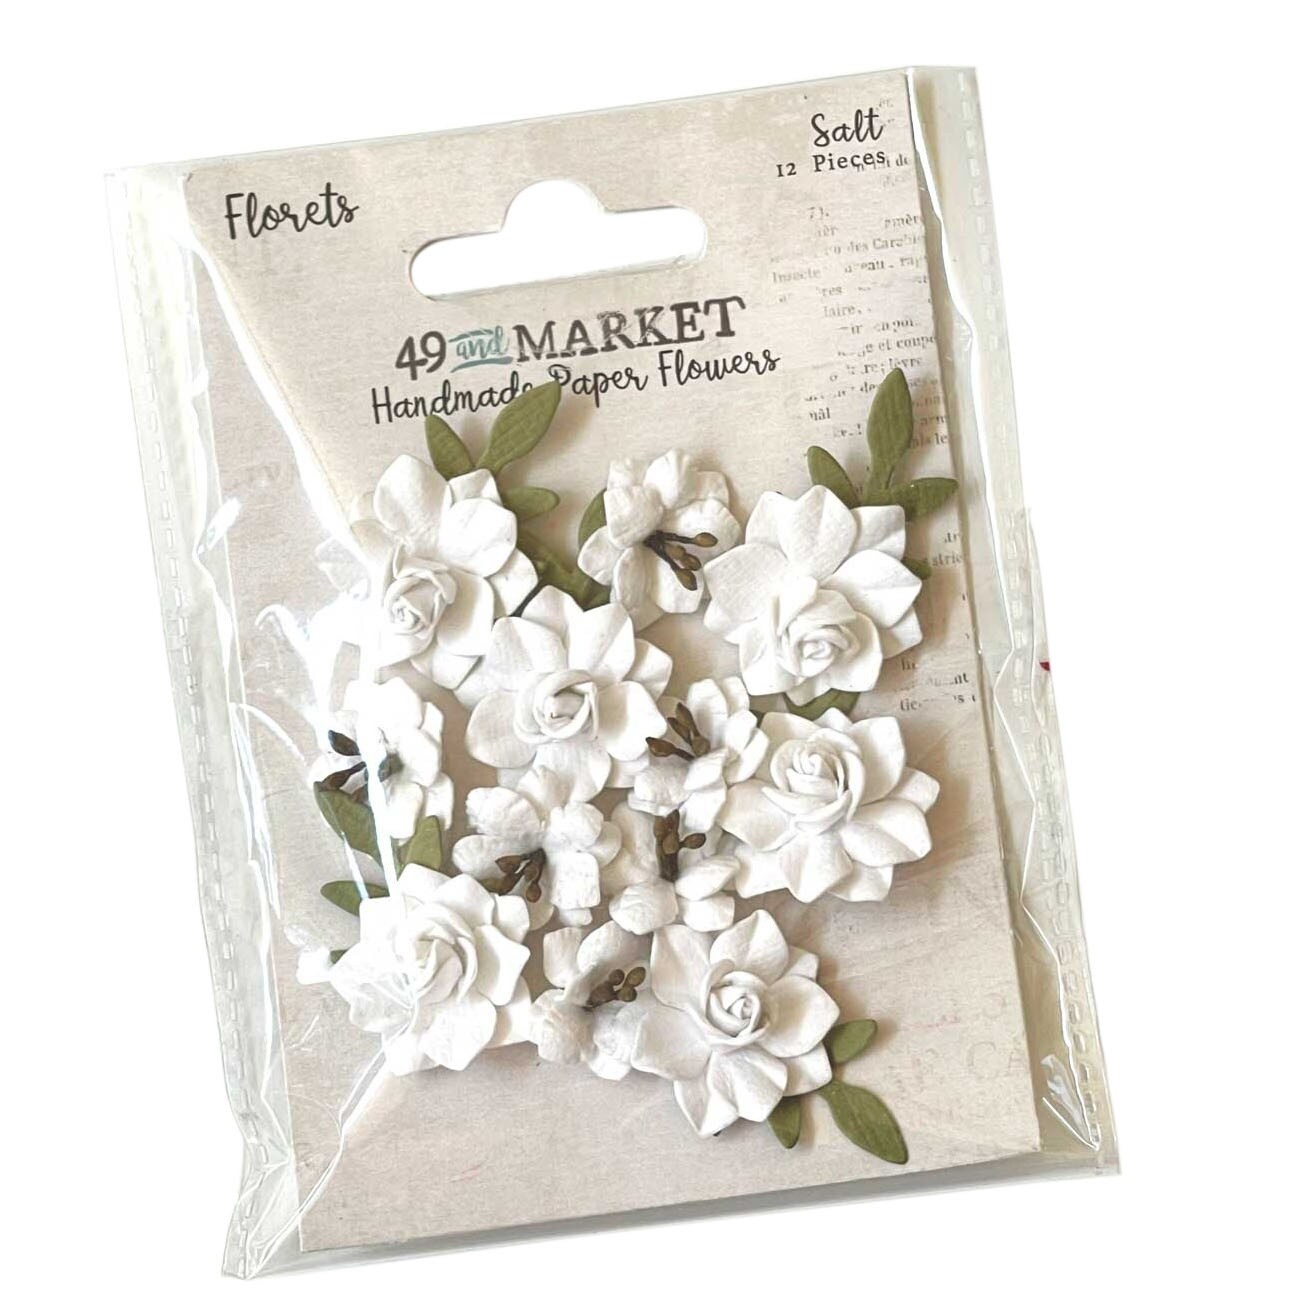 49 And Market Florets Paper Flowers